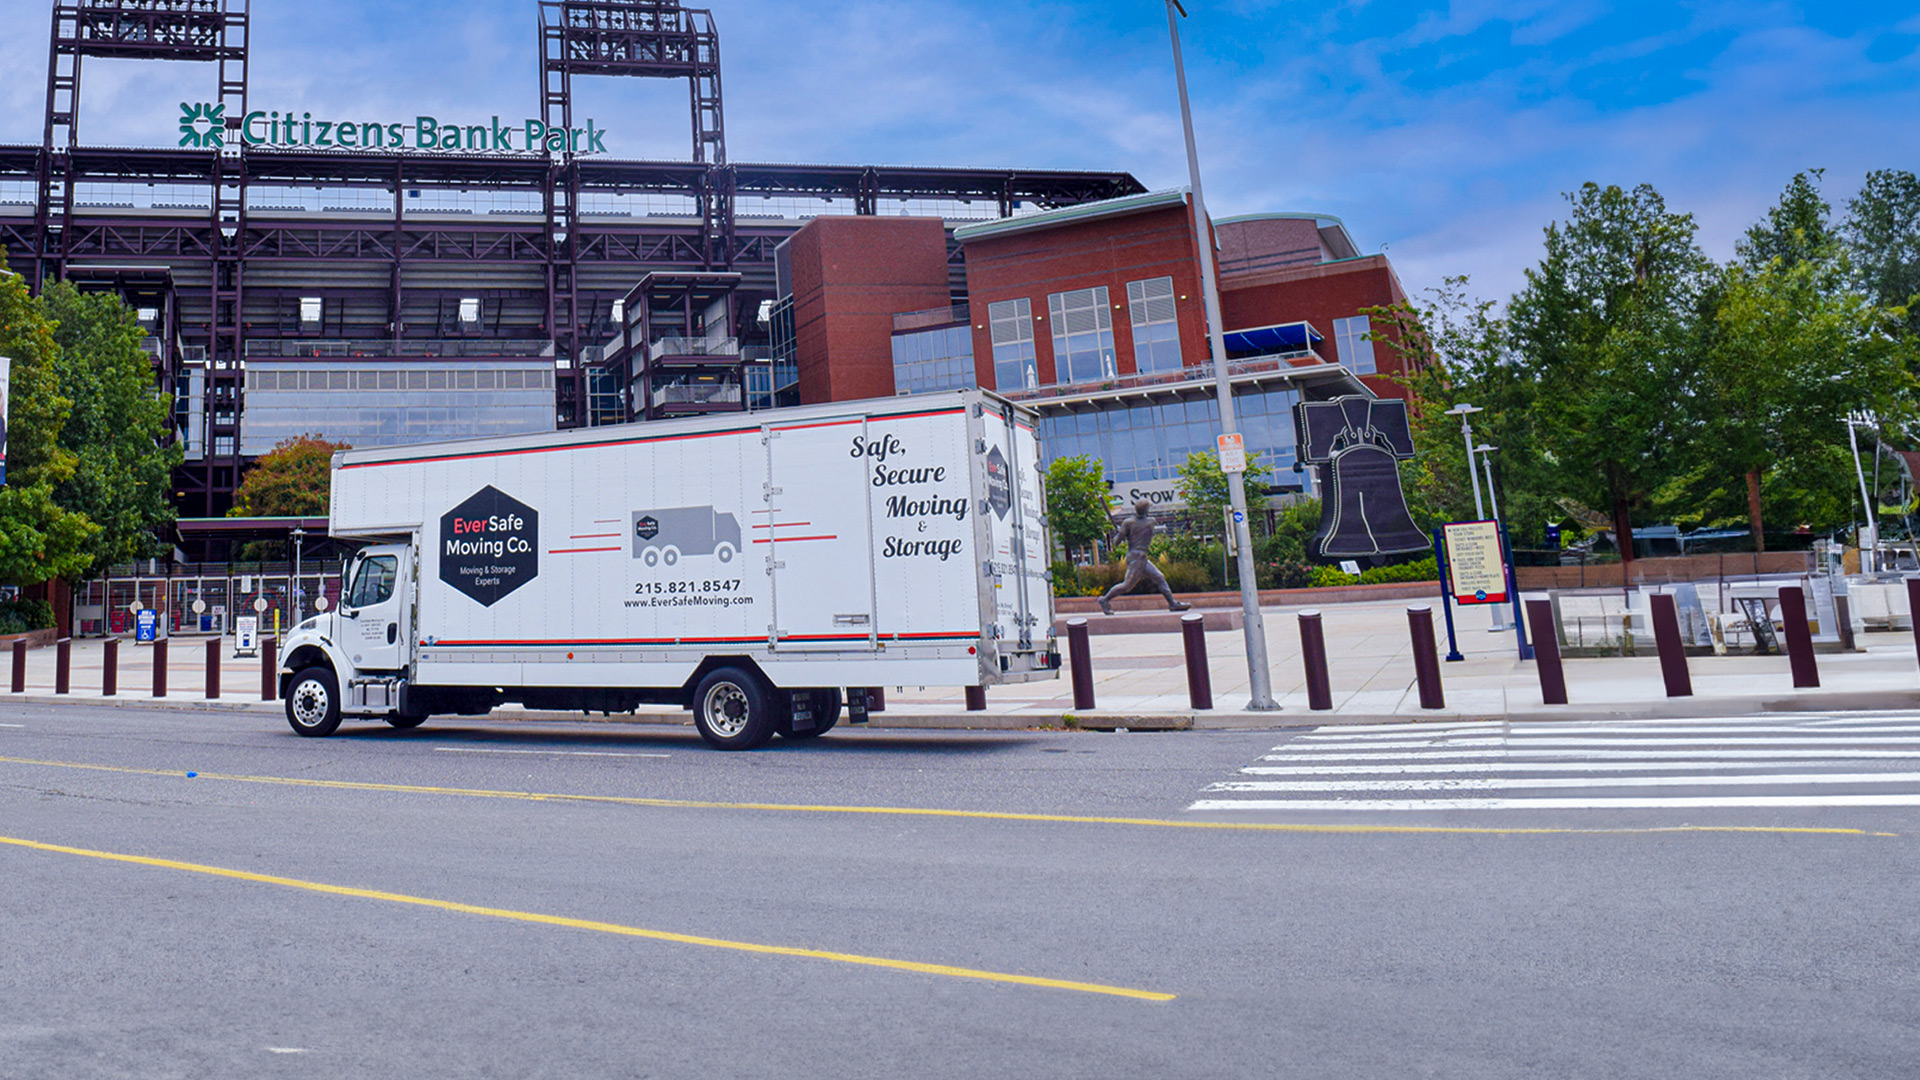 Eversafe Truck in front of Citizens Bank Park in Philadelphia